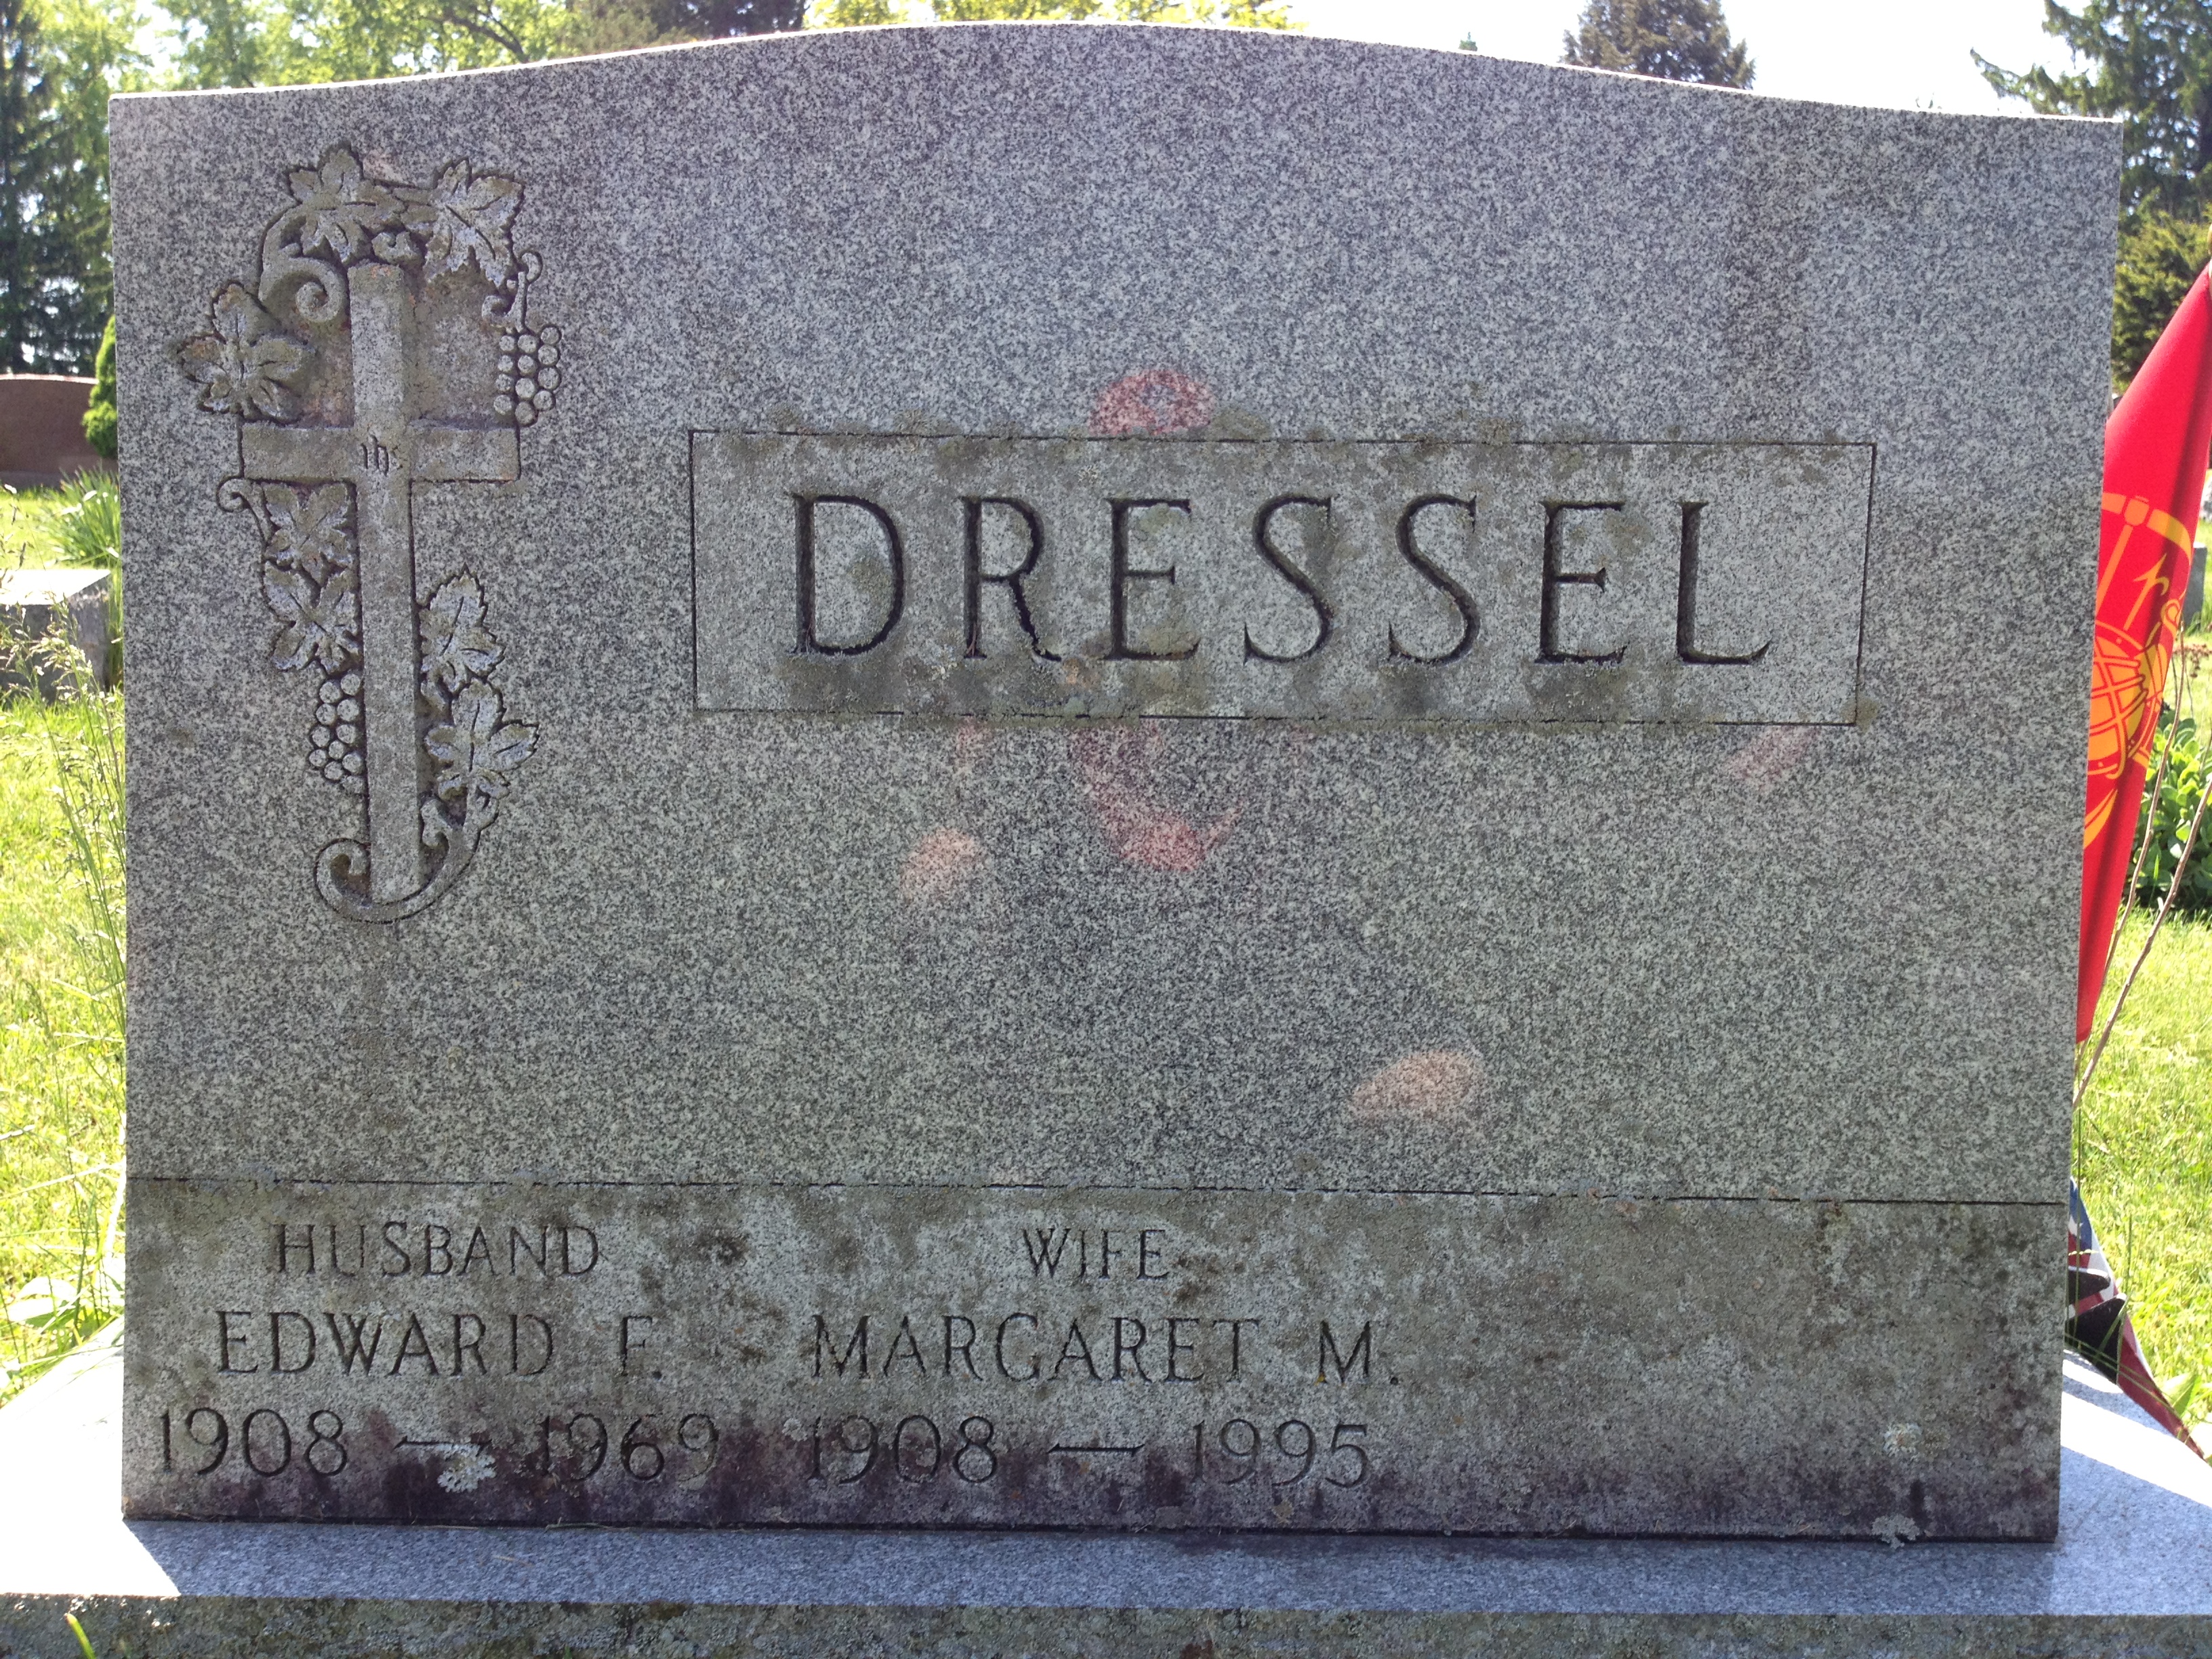 Headstone of Edward F. Dressel and Margaret M. Pryor